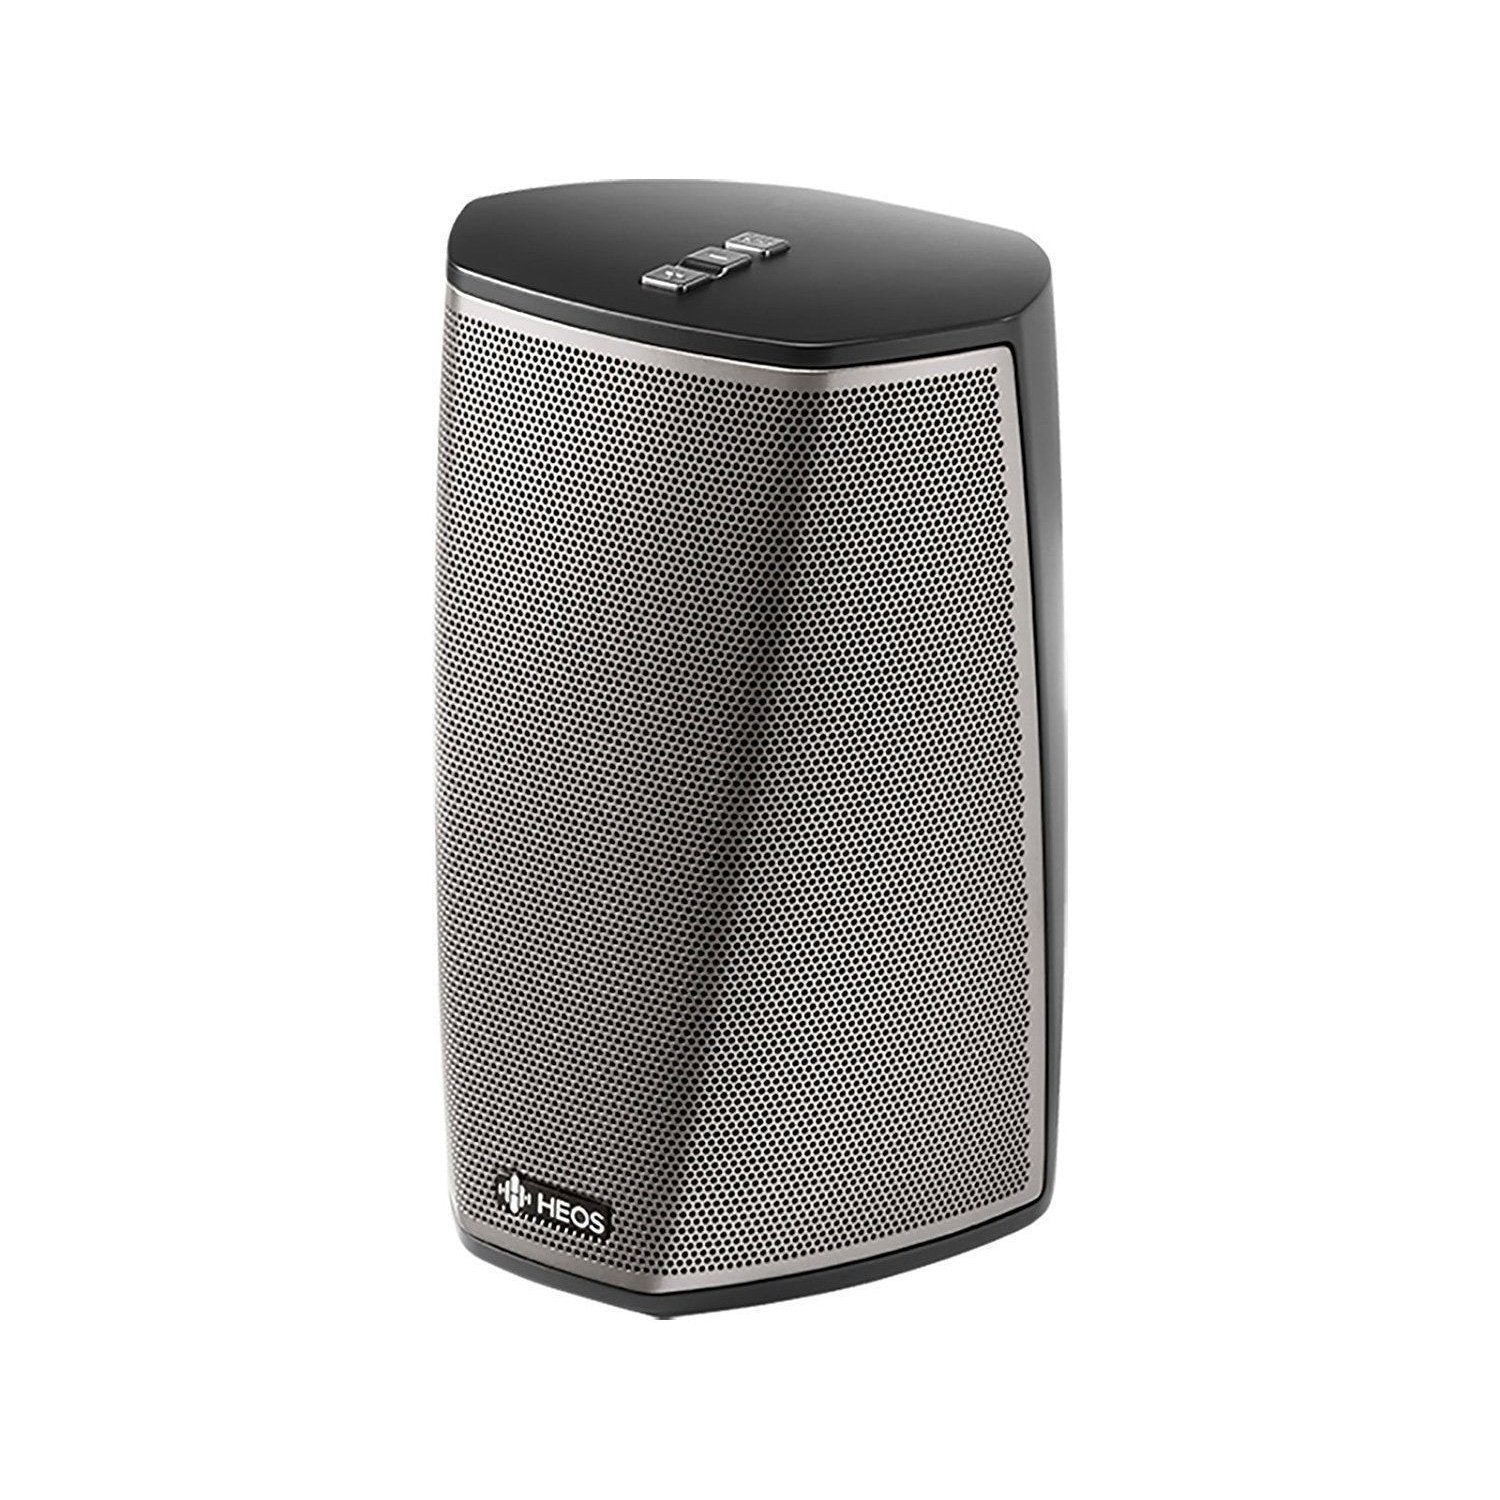 Denon HEOS 1 HS2 Wireless Speaker, Works with Alexa